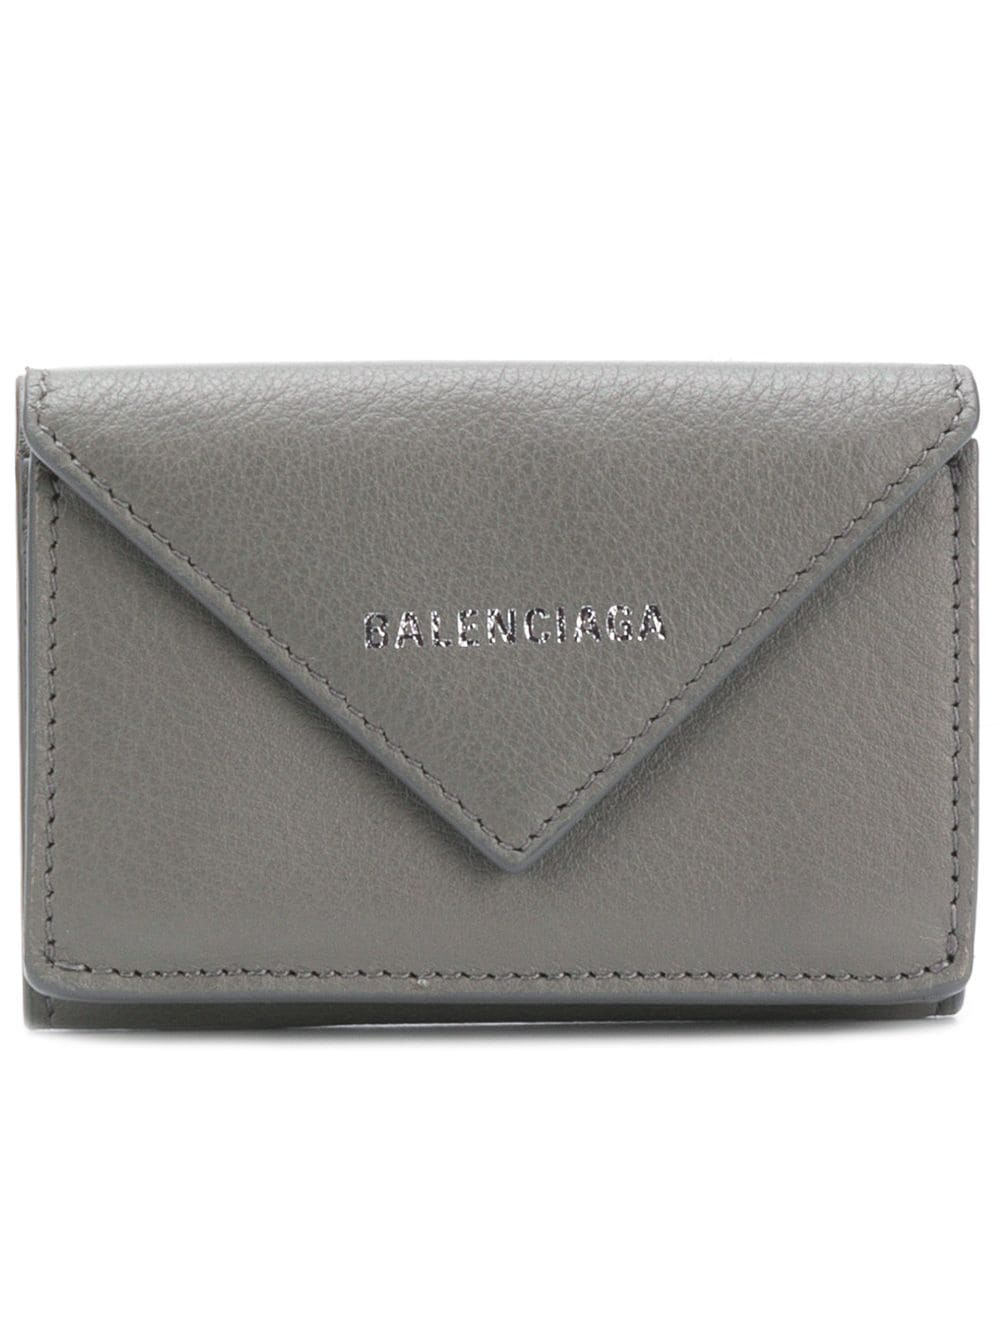 Image 1 of Balenciaga mini Paper wallet